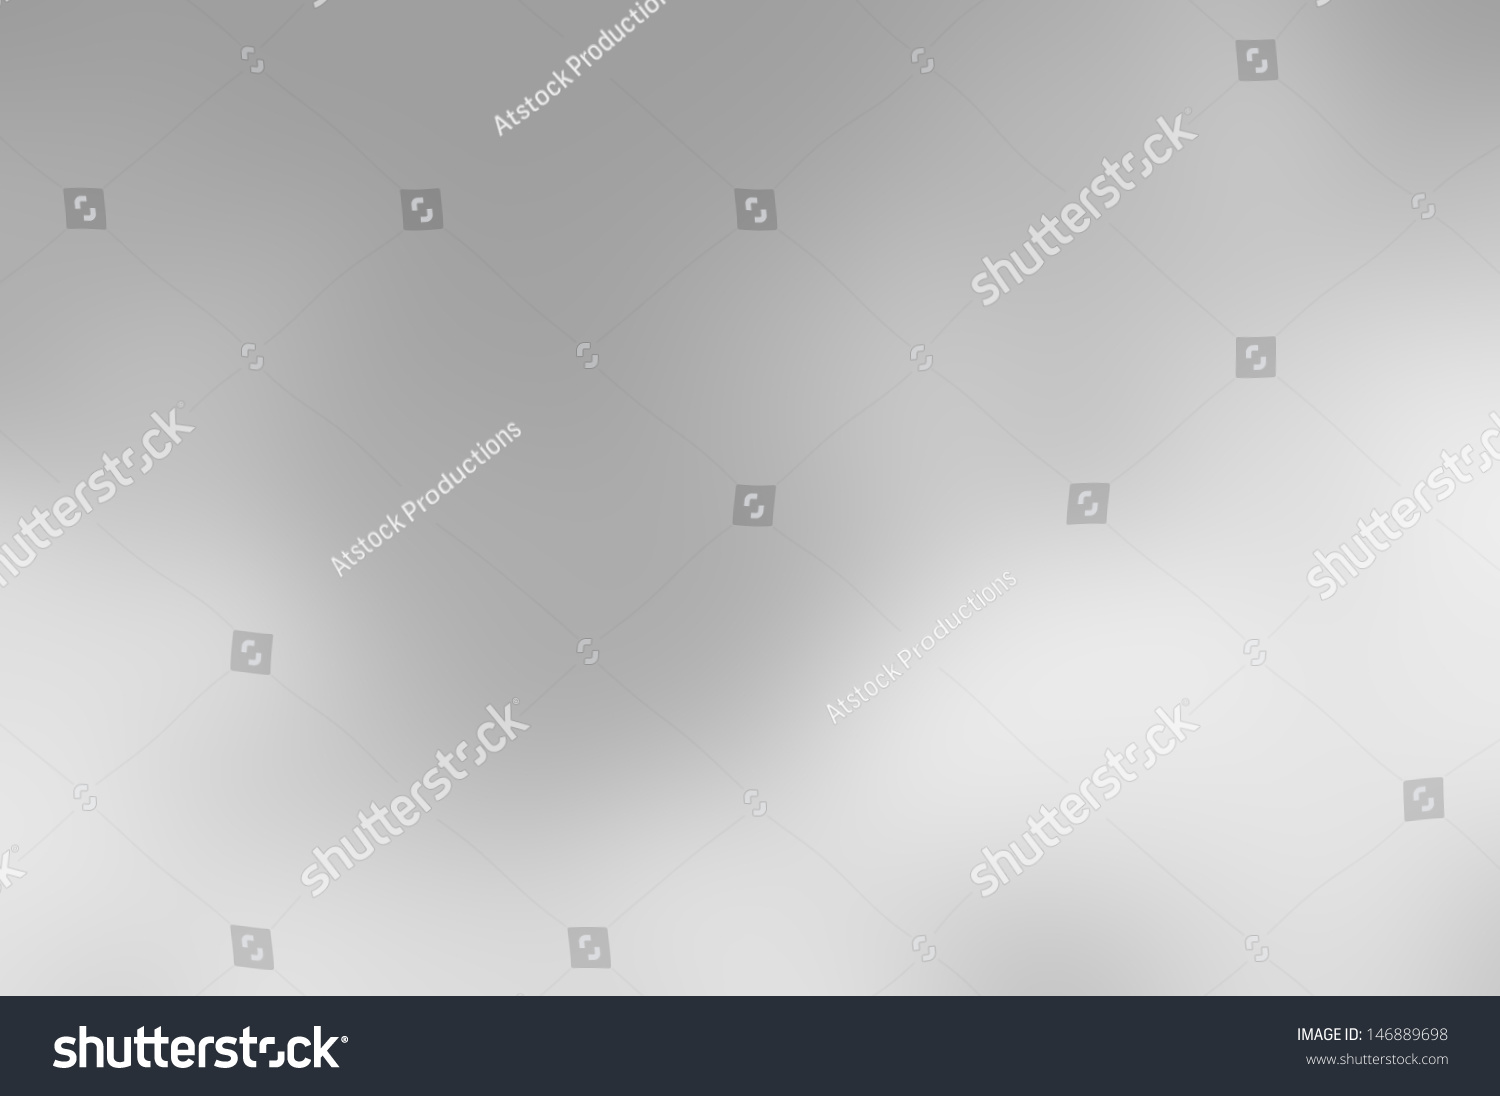 Light Gray Abstract Background Stock Illustration 146889698 - Shutterstock